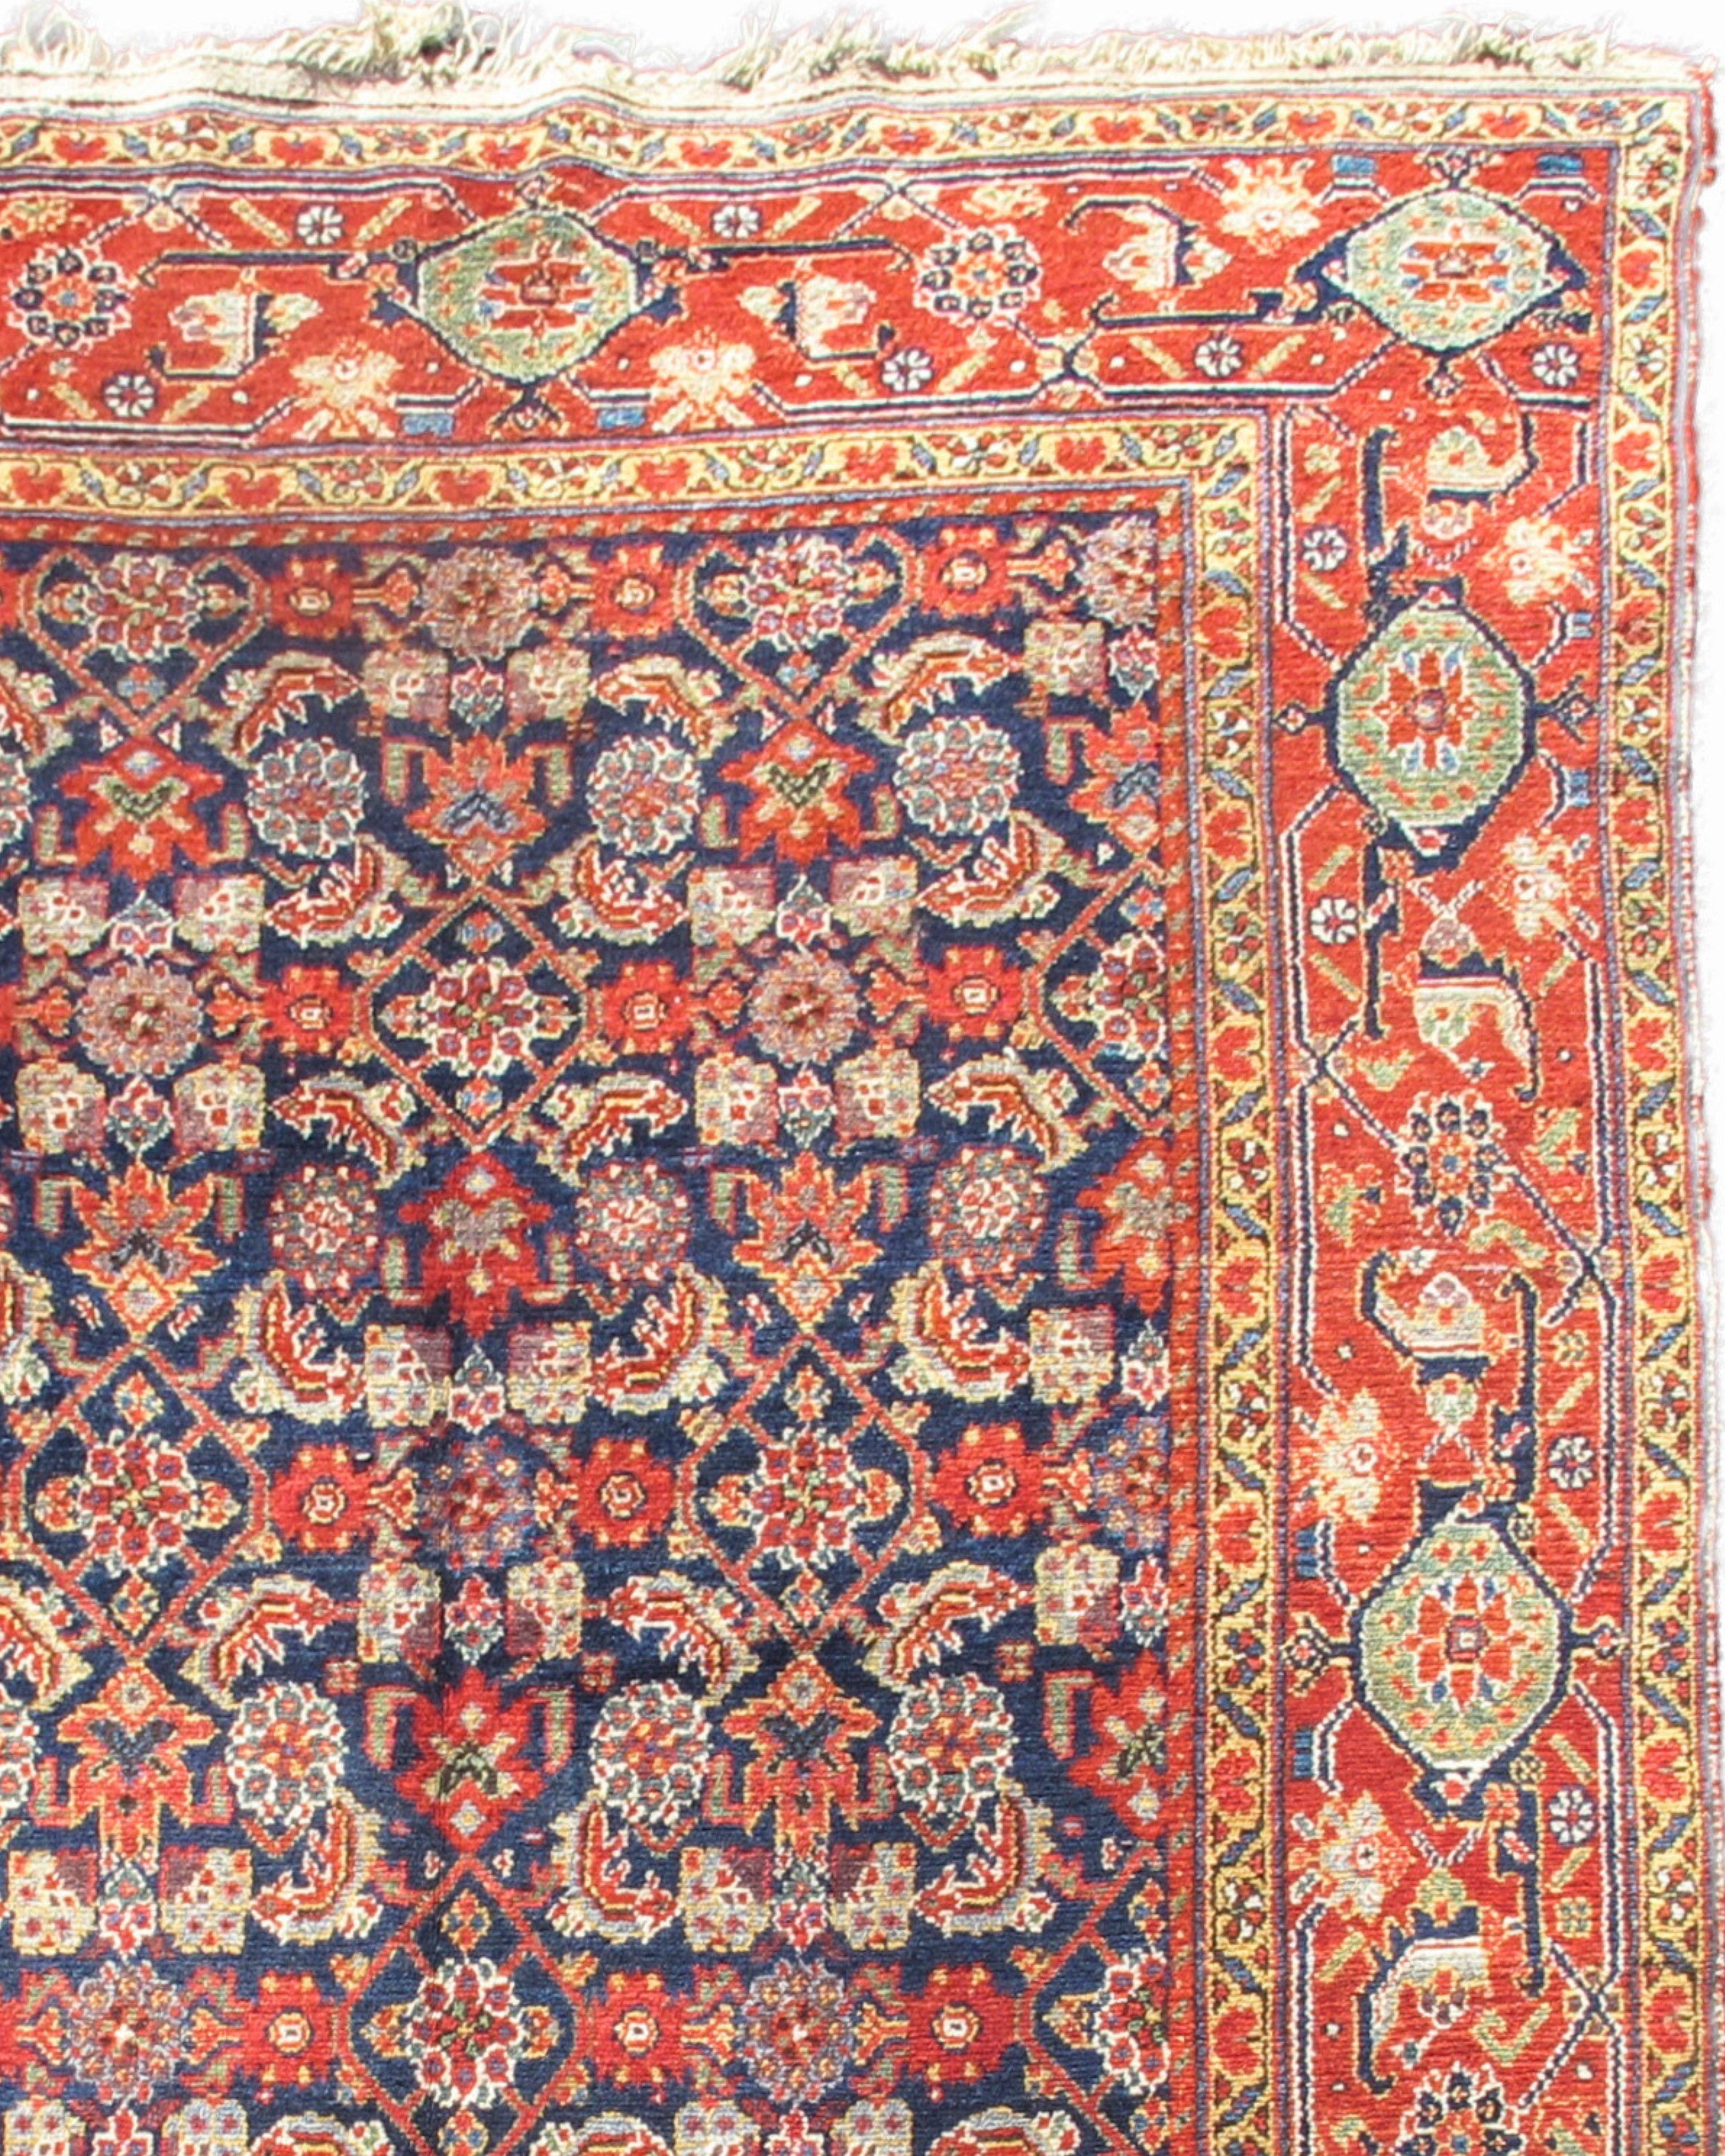 Original Condition Northwest Persian Long Rug, 19th Century

Excellent original condition.

Additional Information:
Dimensions: 5'7